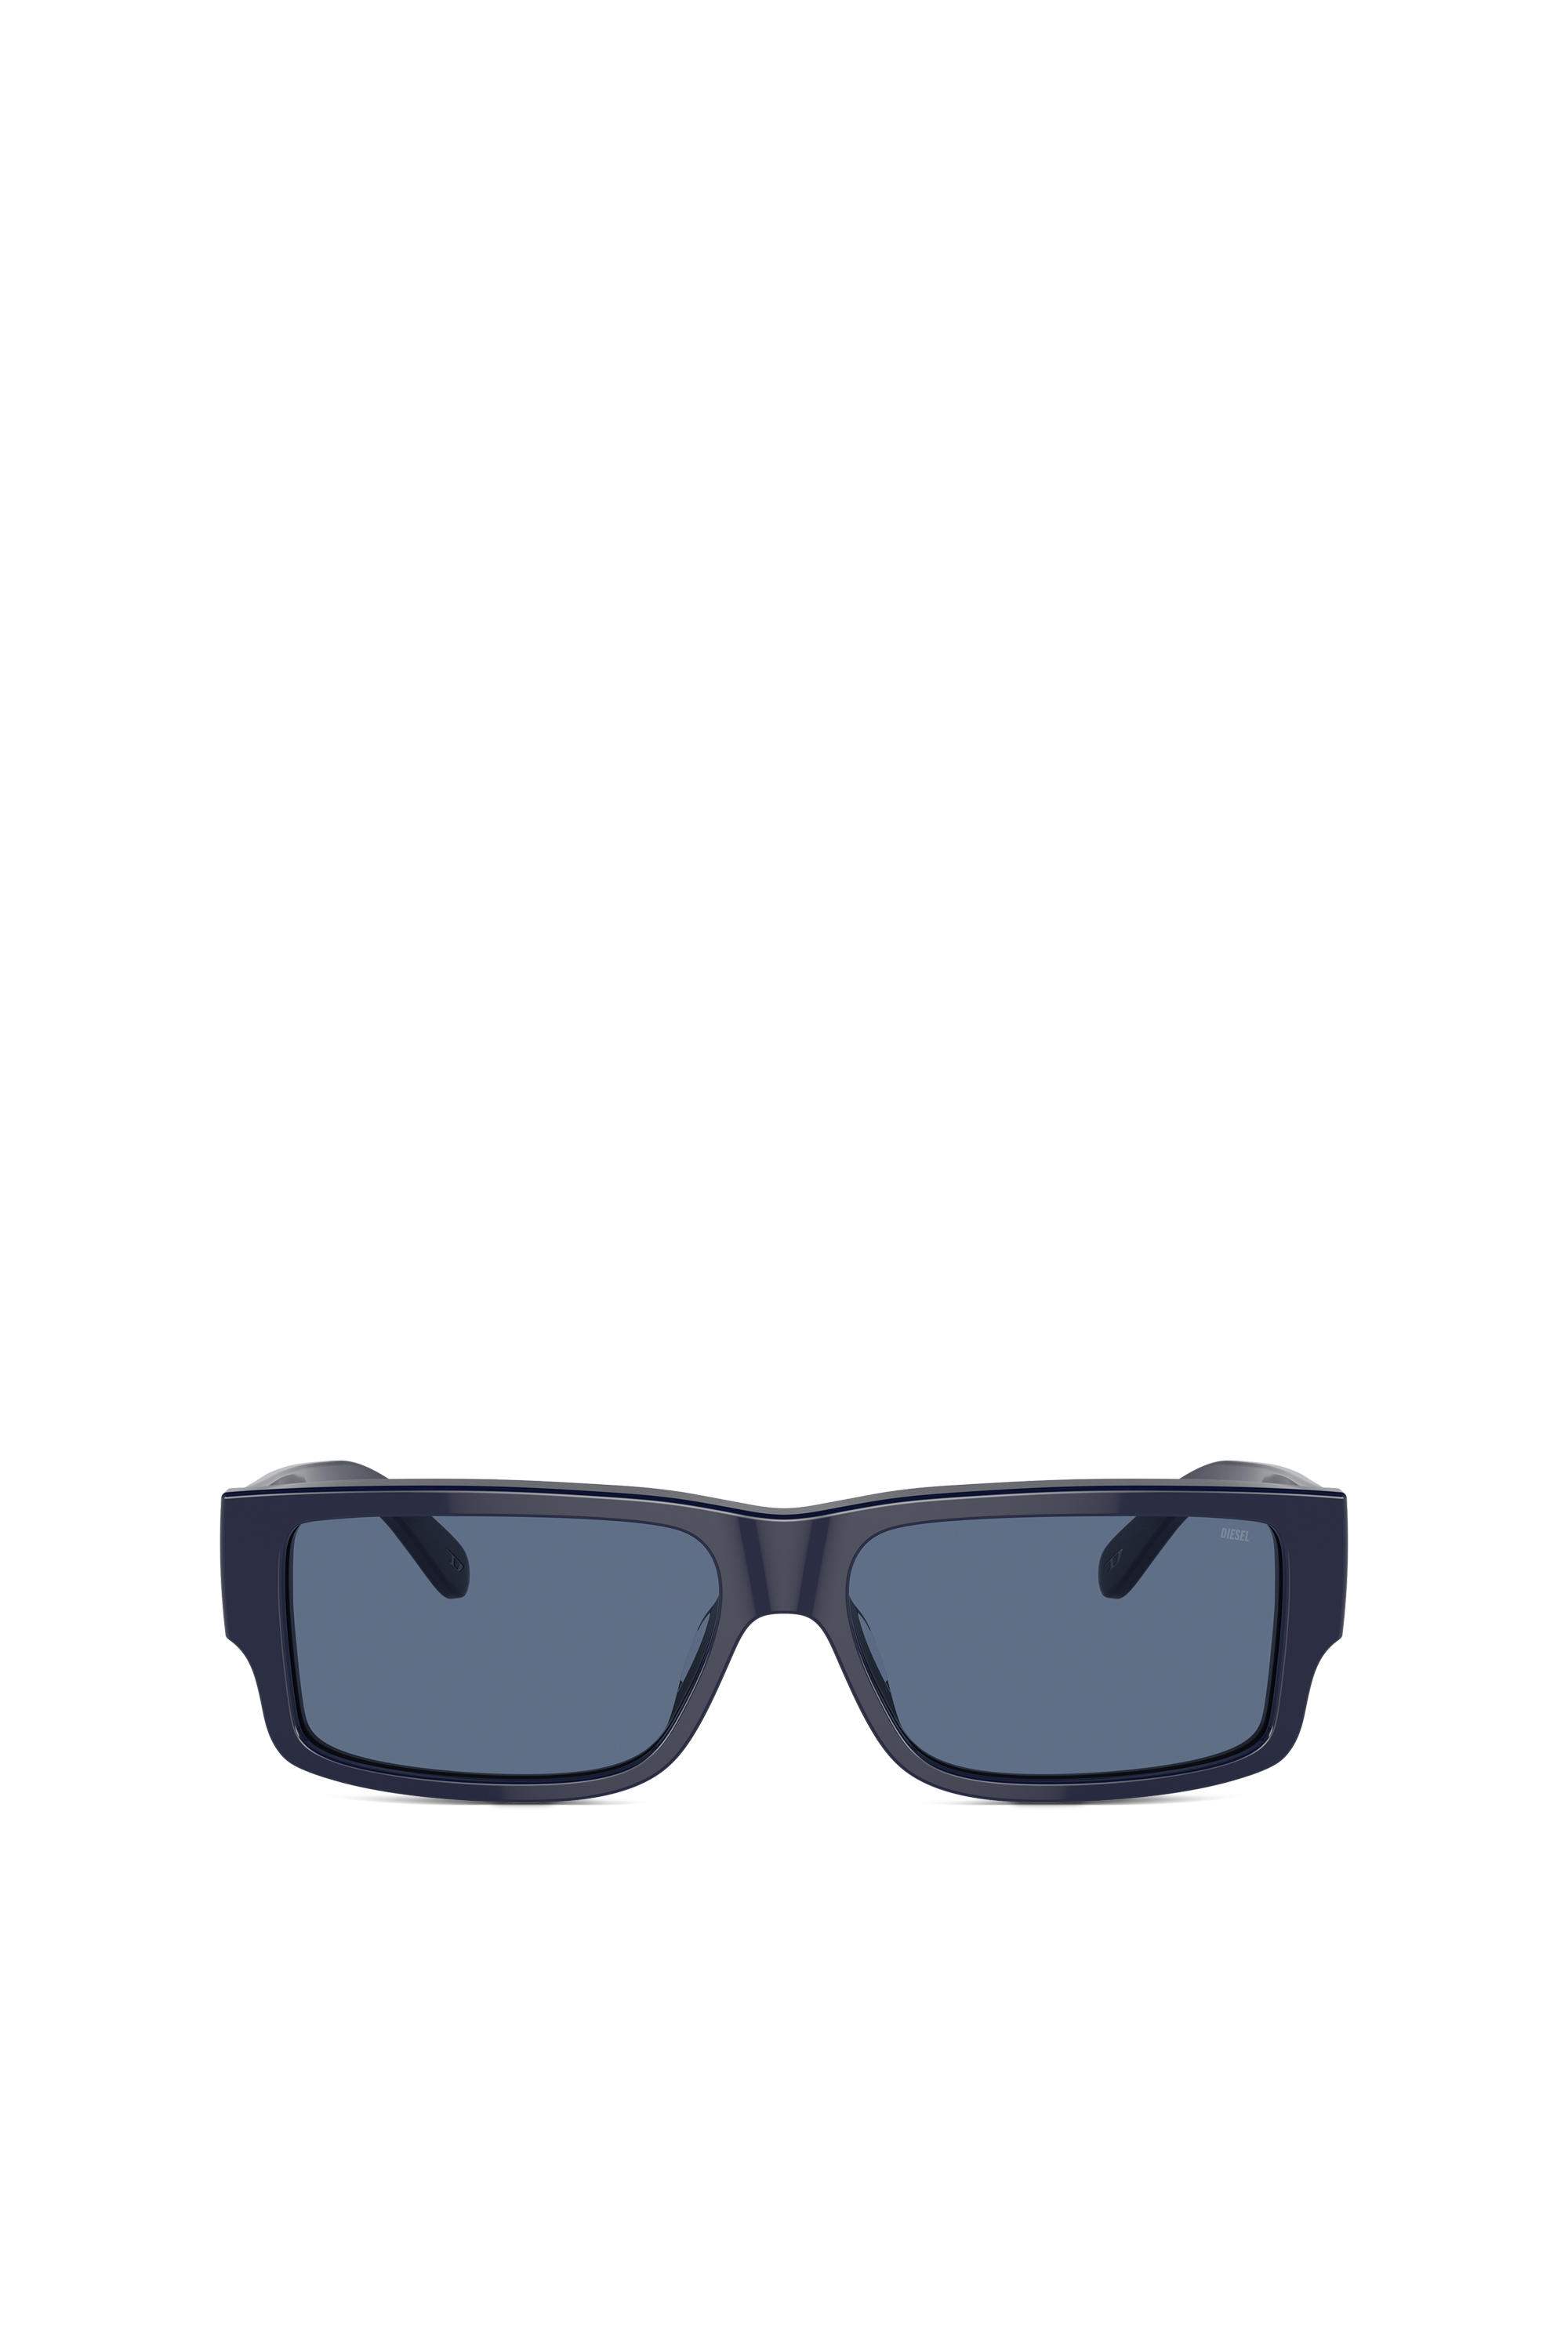 Diesel - Gafas rectangulares - Gafas de sol - Hombre - Azul marino